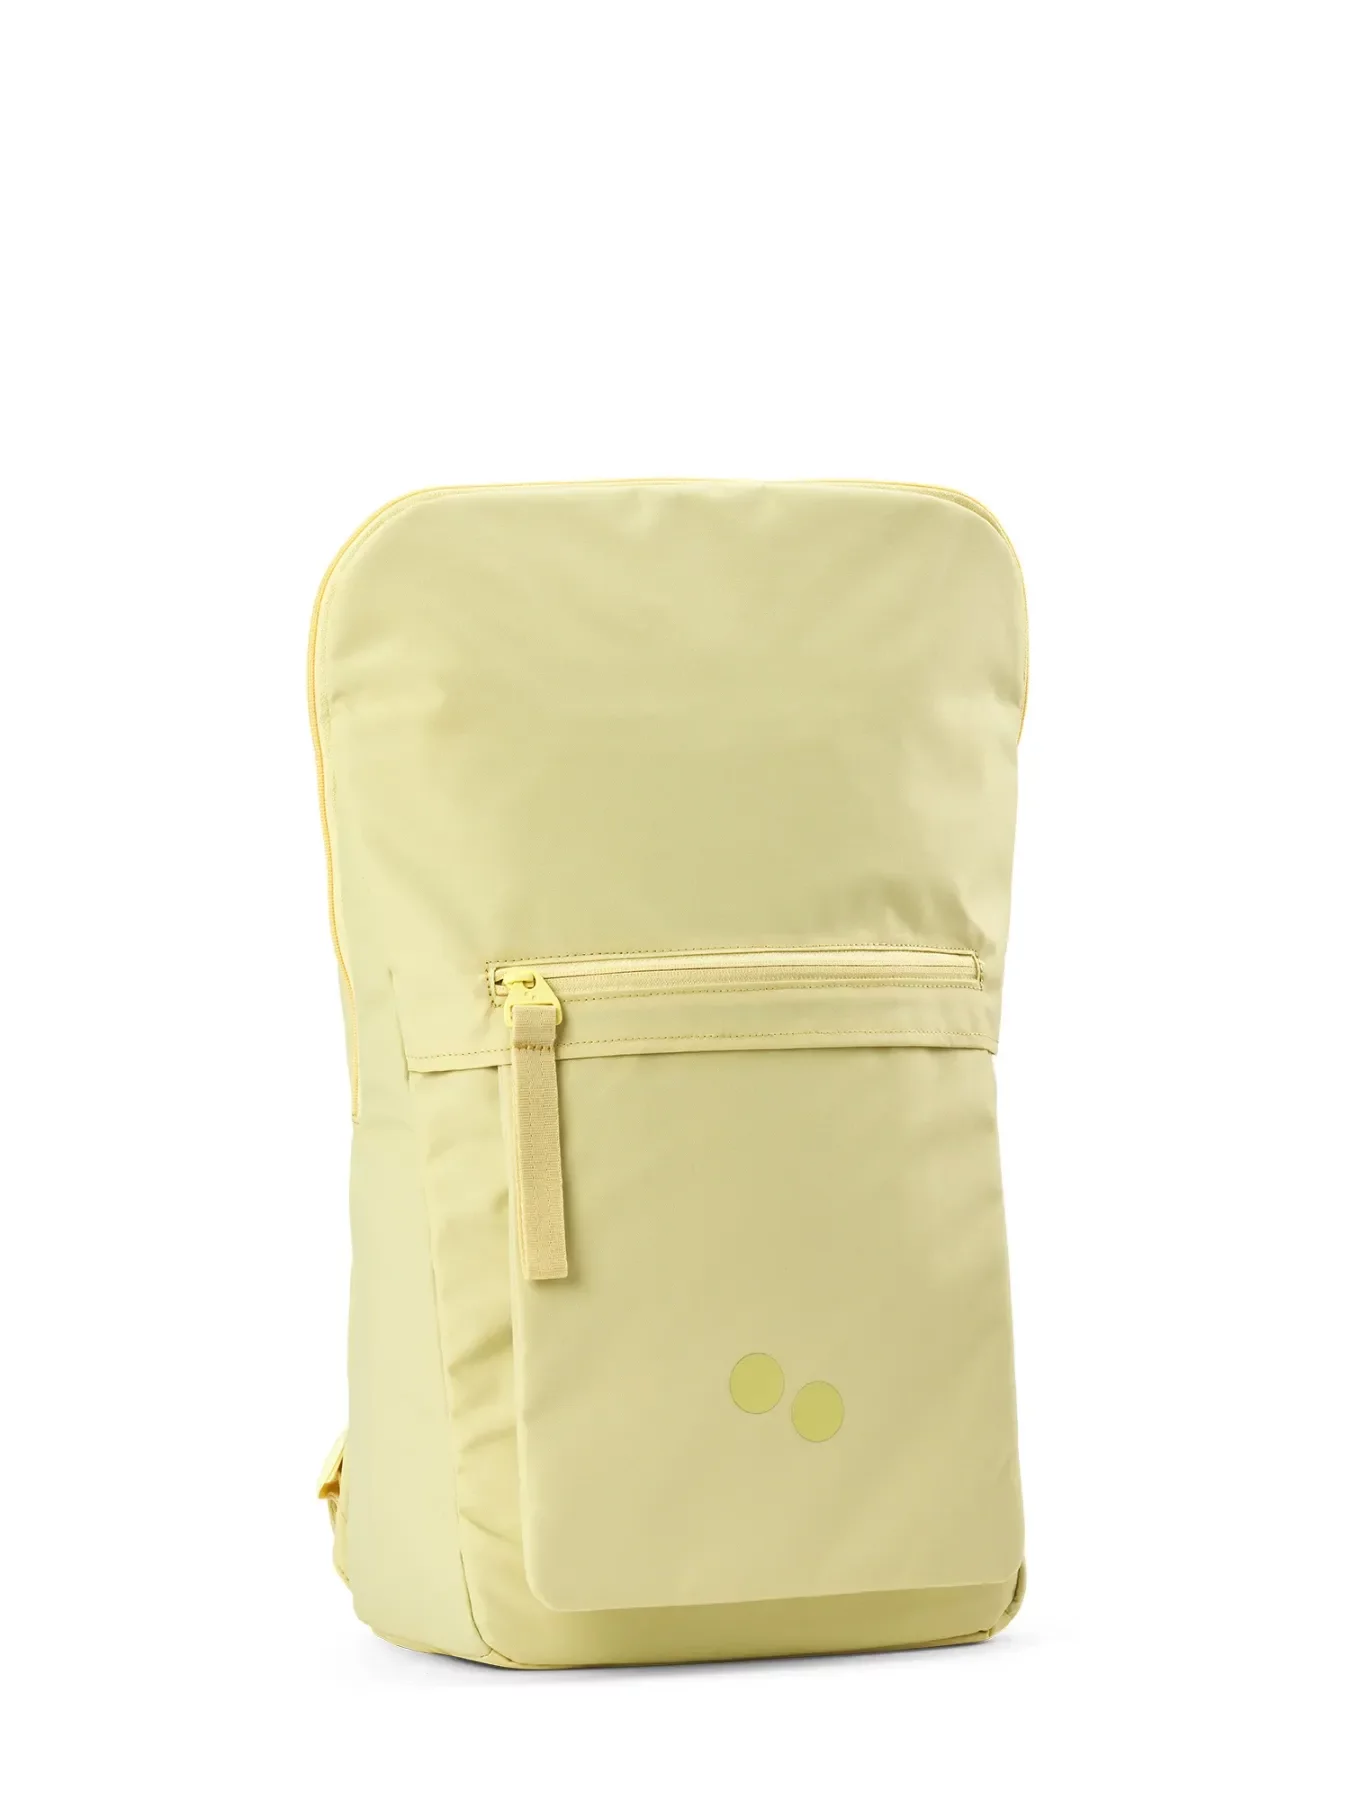 pinqponq Backpack KLAK - Buttercreme Yellow 7